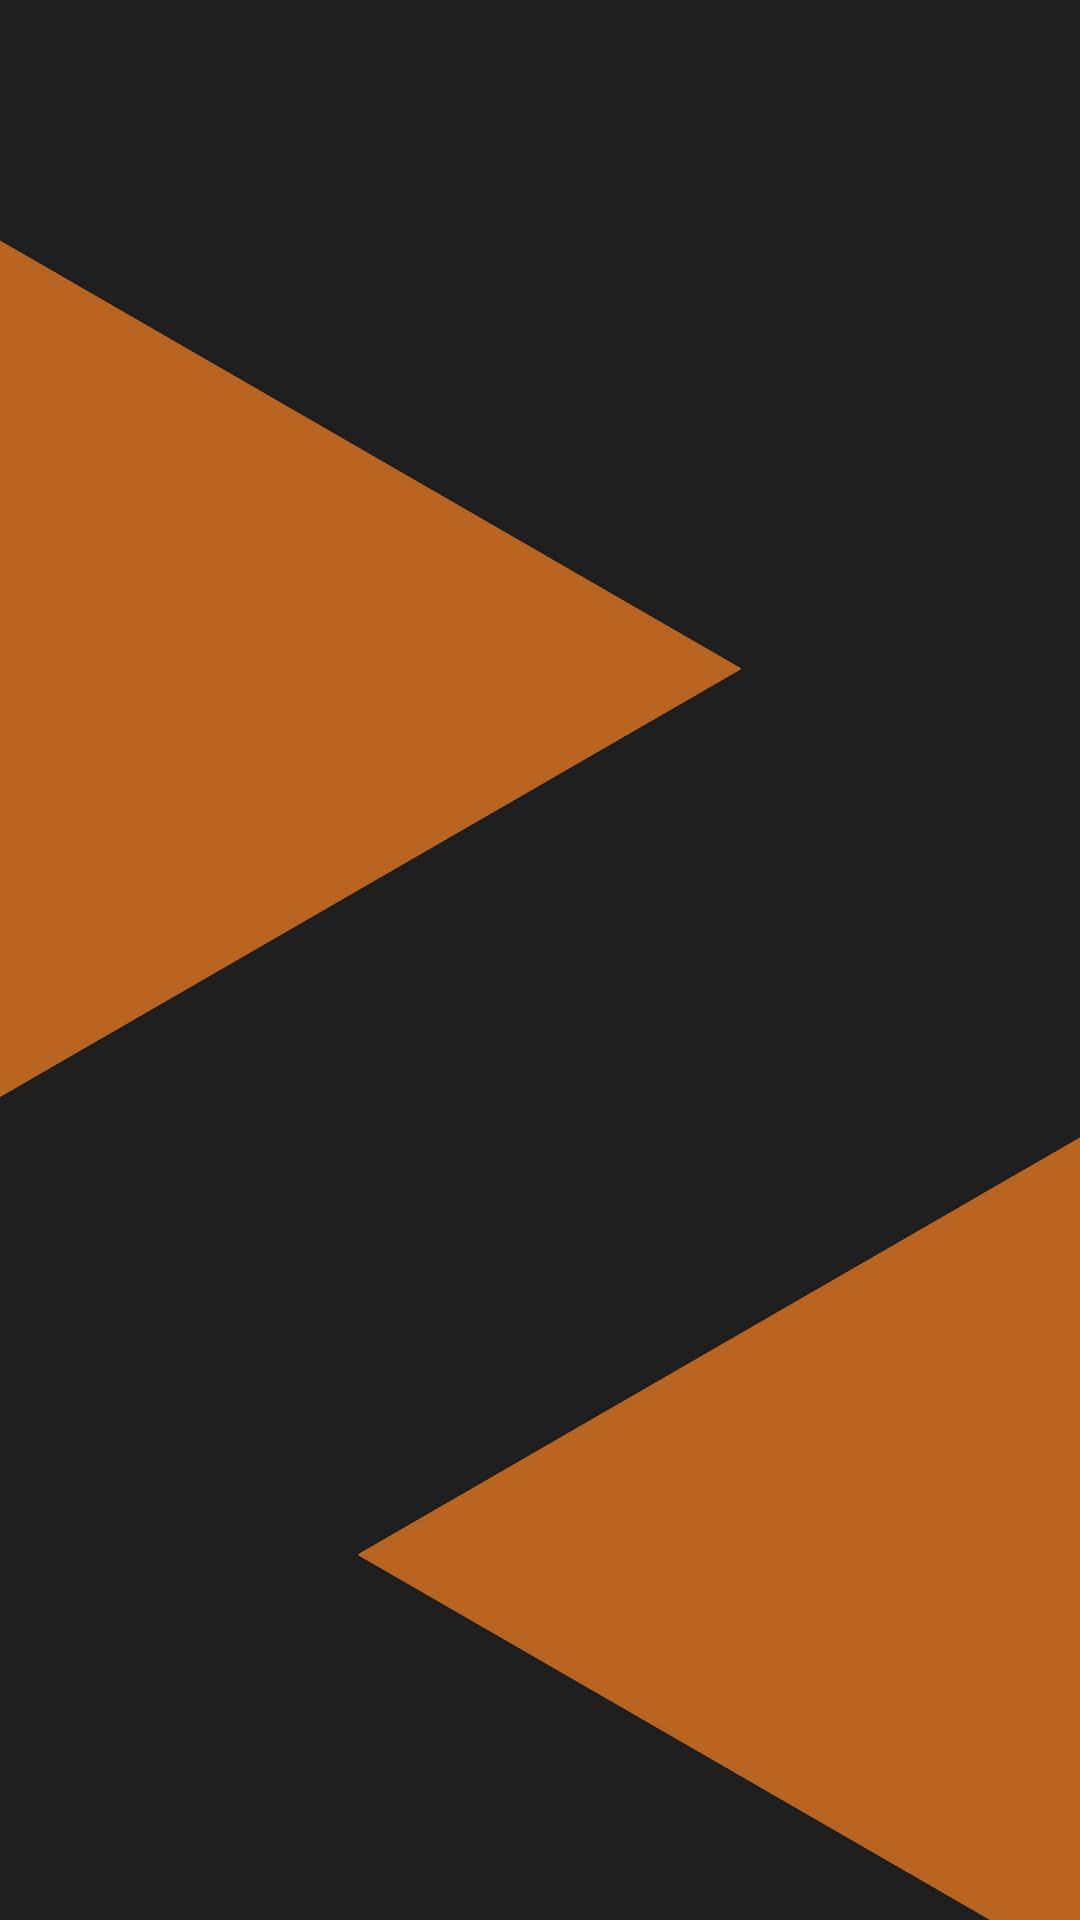 Orange And Black Triangle Background